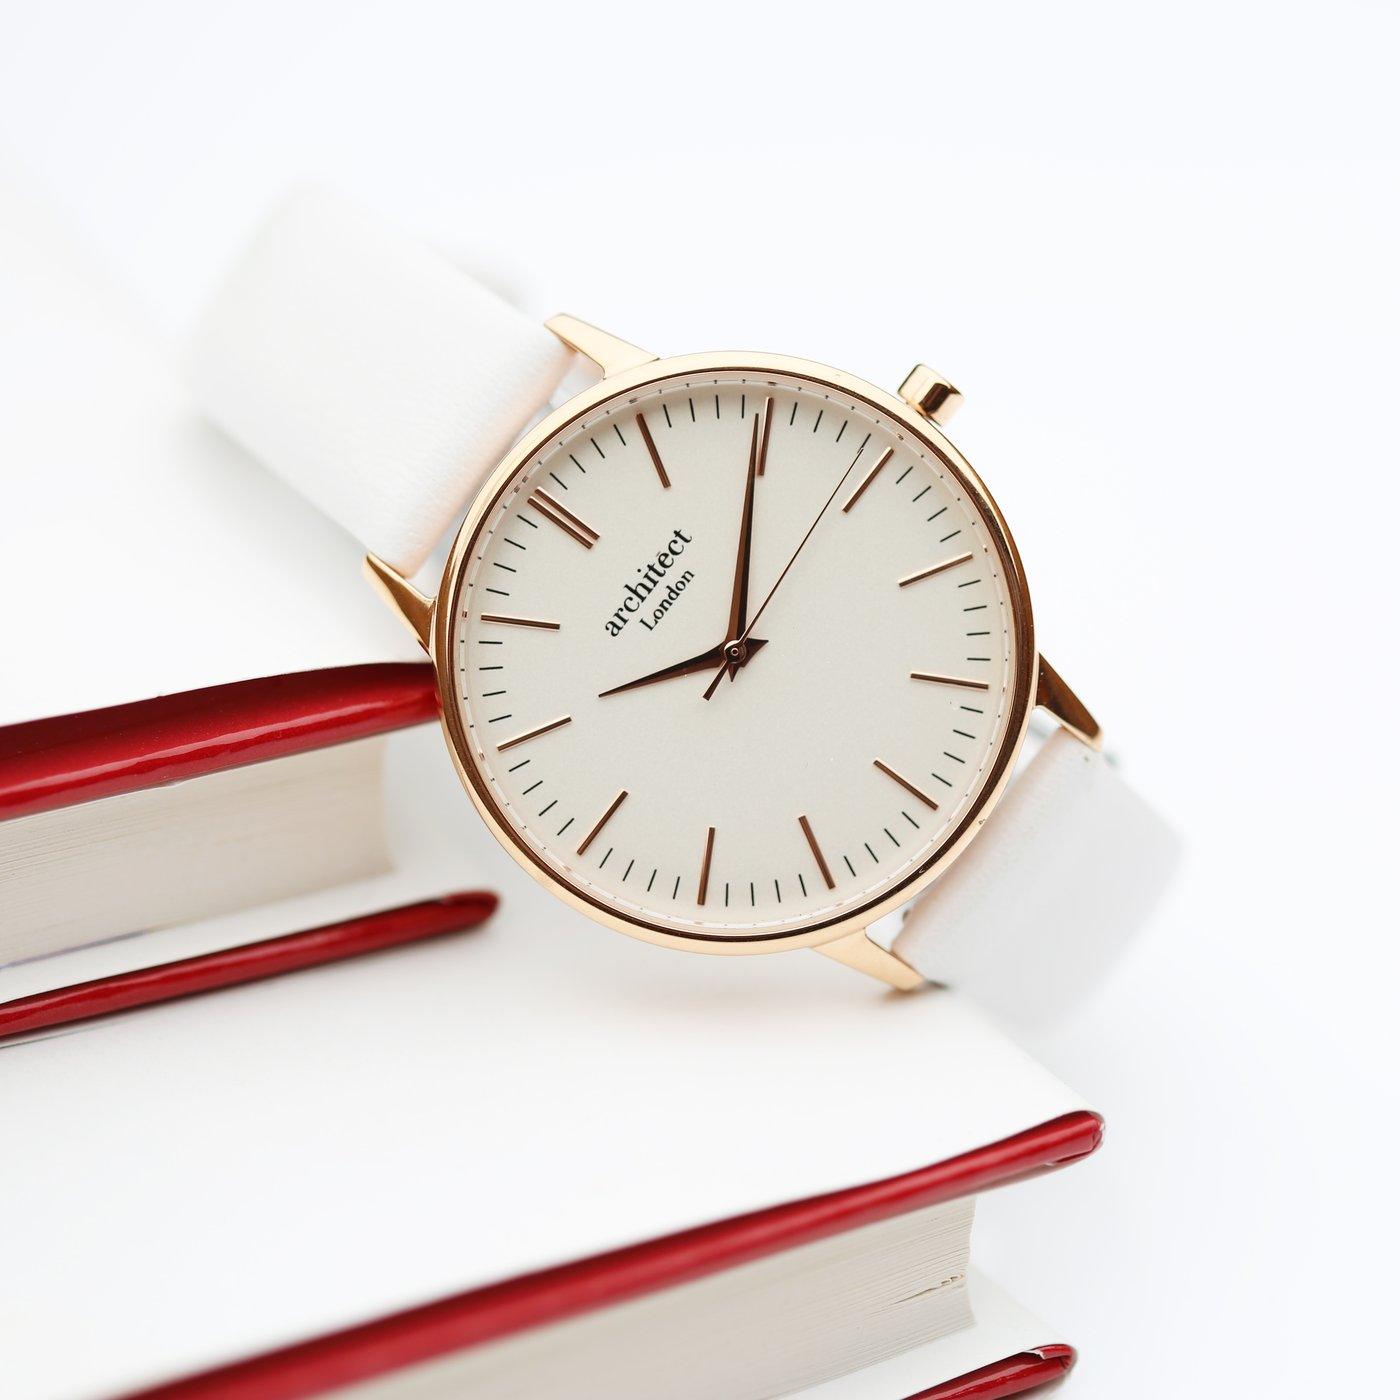 Own Handwriting Engraving Architēct Blanc Ladies Watch + White Strap - Shop Personalised Gifts